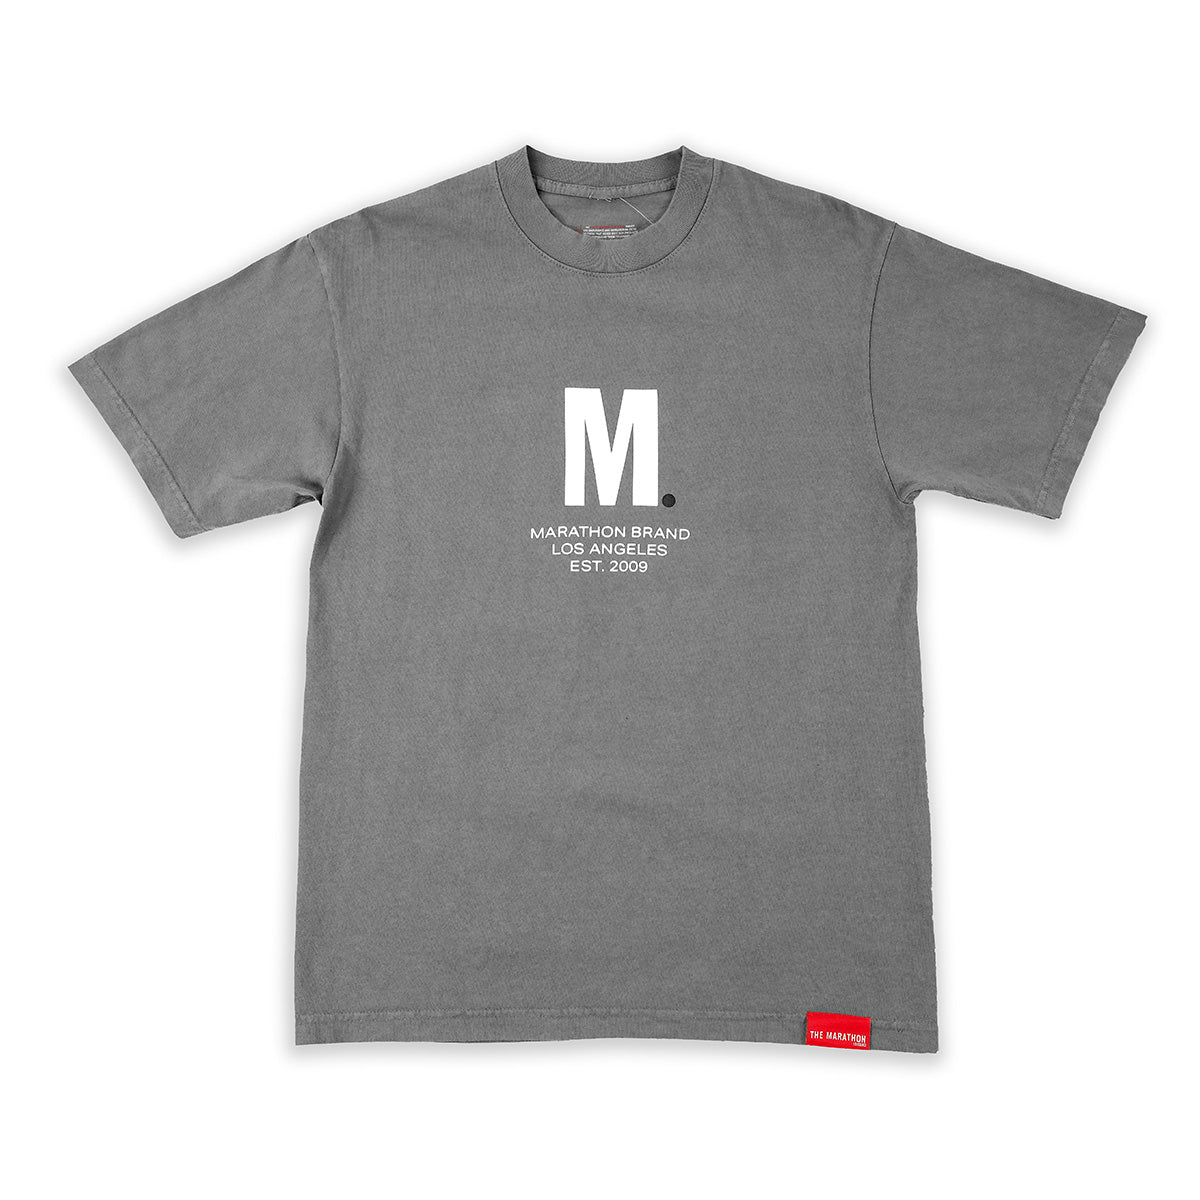 Big M. T-Shirt - Slate Grey/White - Front